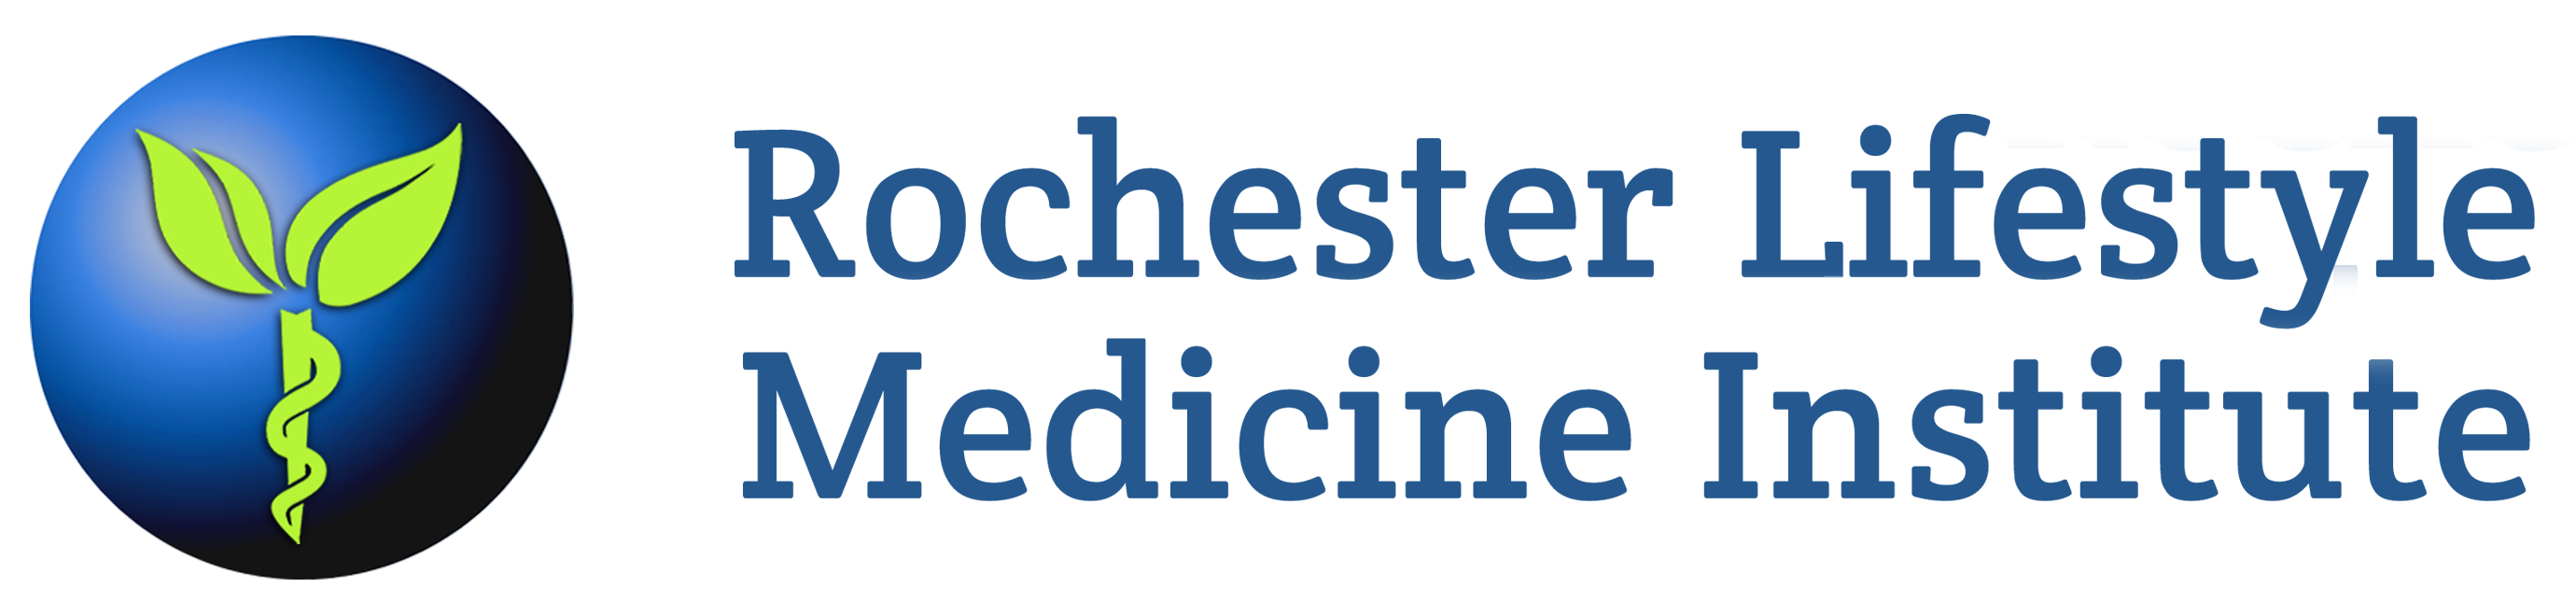 Rochester Lifestyle Medicine Institute